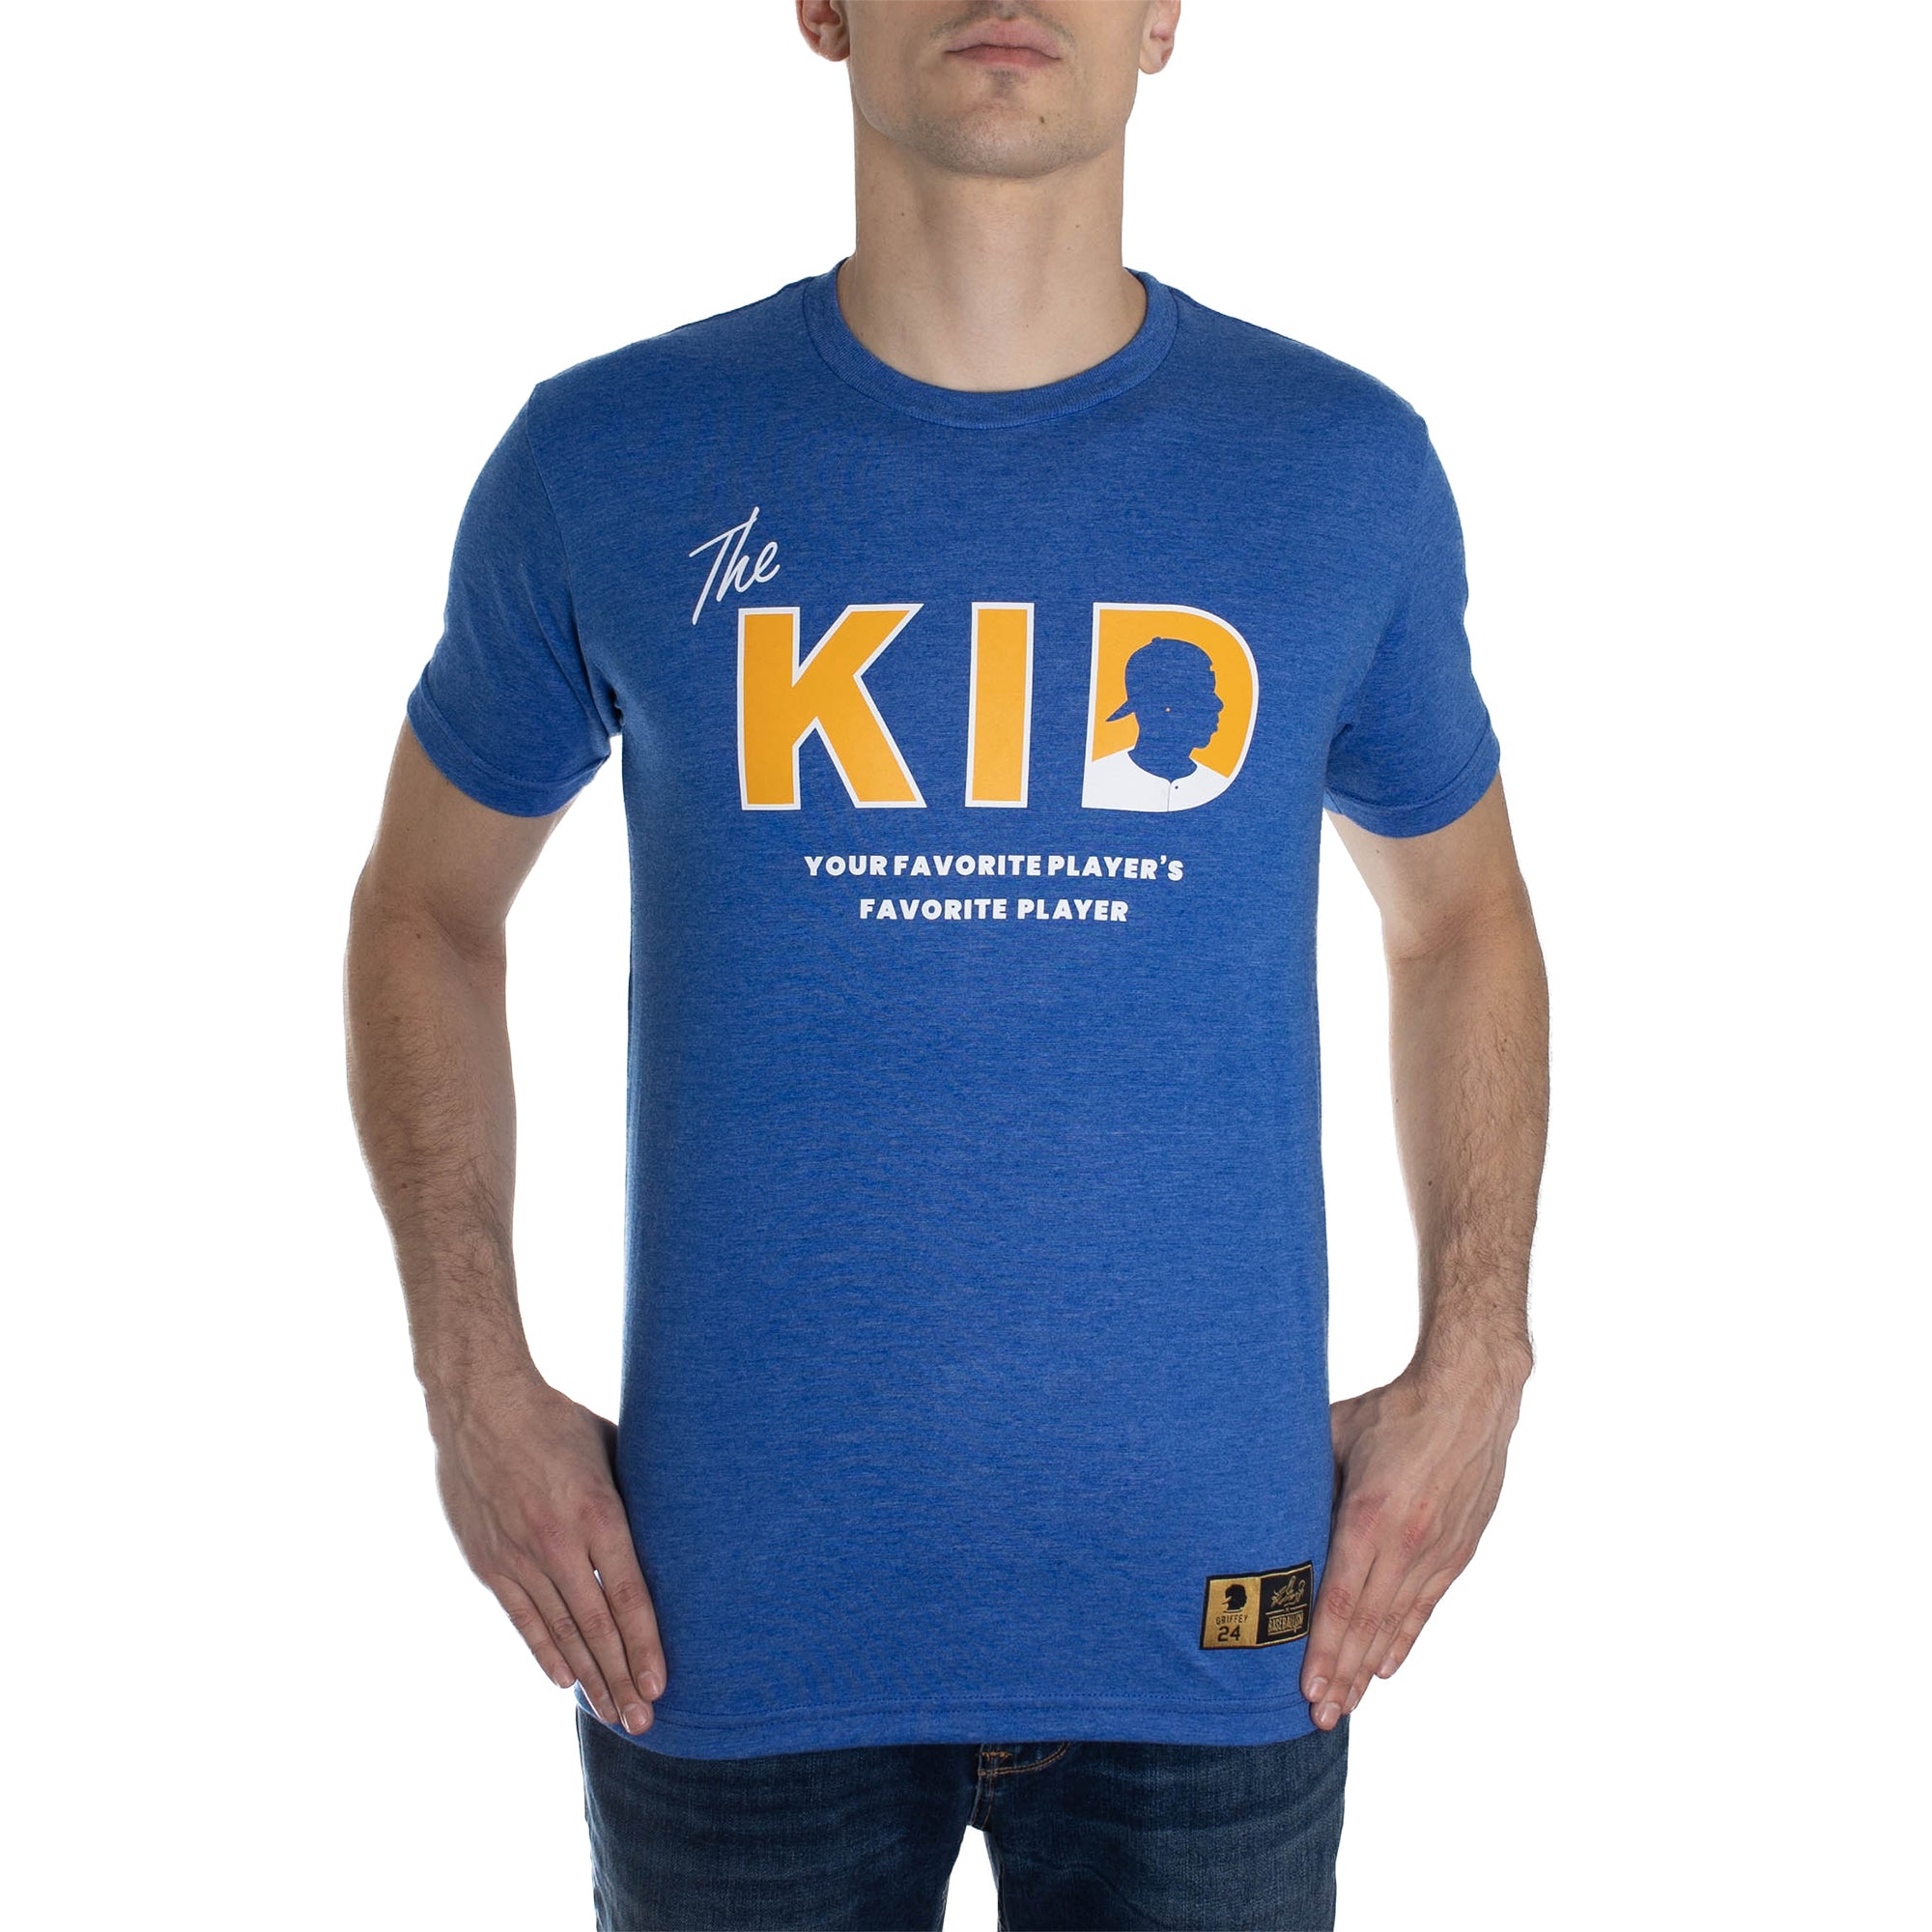  Ken Griffey Jr. Youth Shirt (Kids Shirt, 6-7Y Small